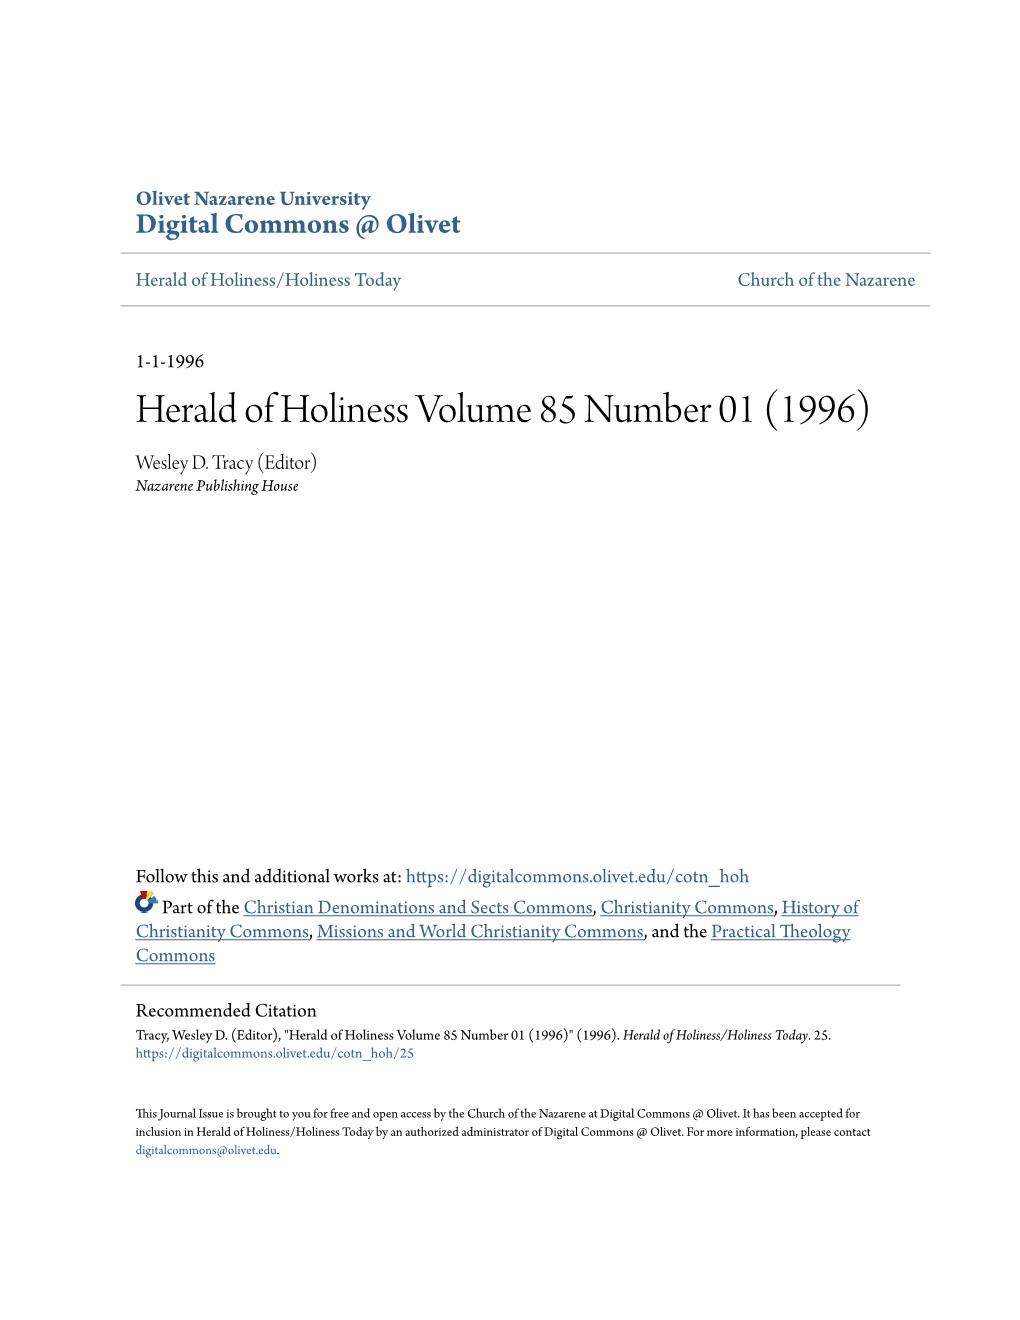 Herald of Holiness Volume 85 Number 01 (1996) Wesley D